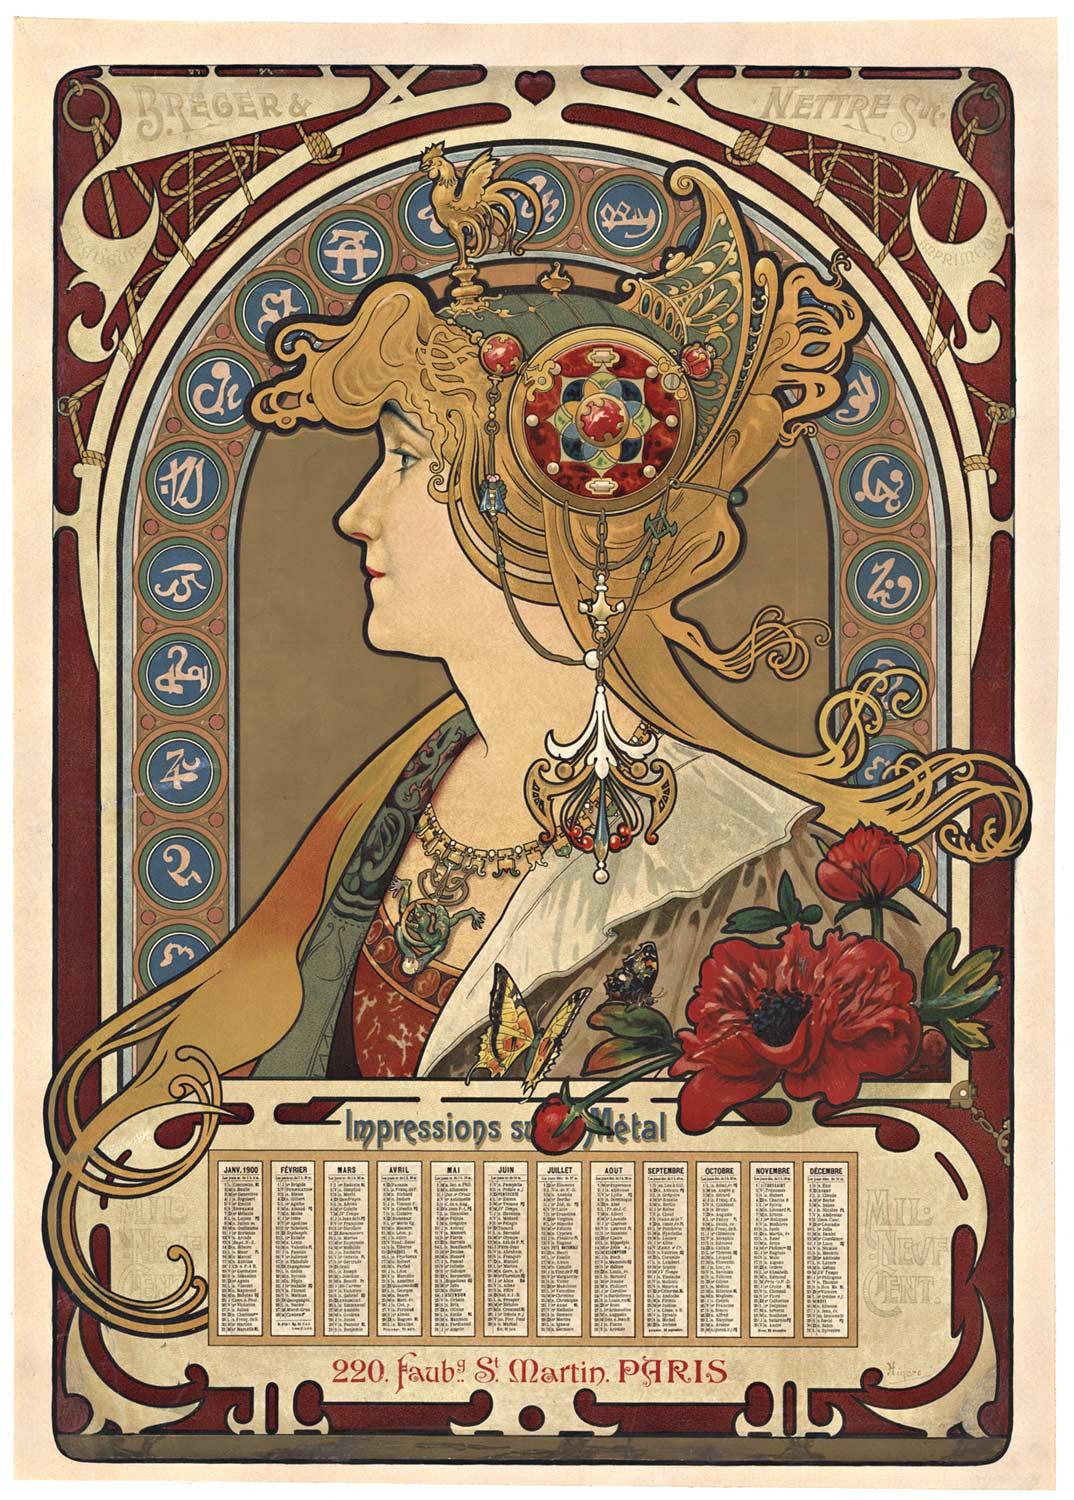 Louis-Theophile Hingre Portrait Print - Original "Breger & Javal" 1899 gold embossed calendar and poster